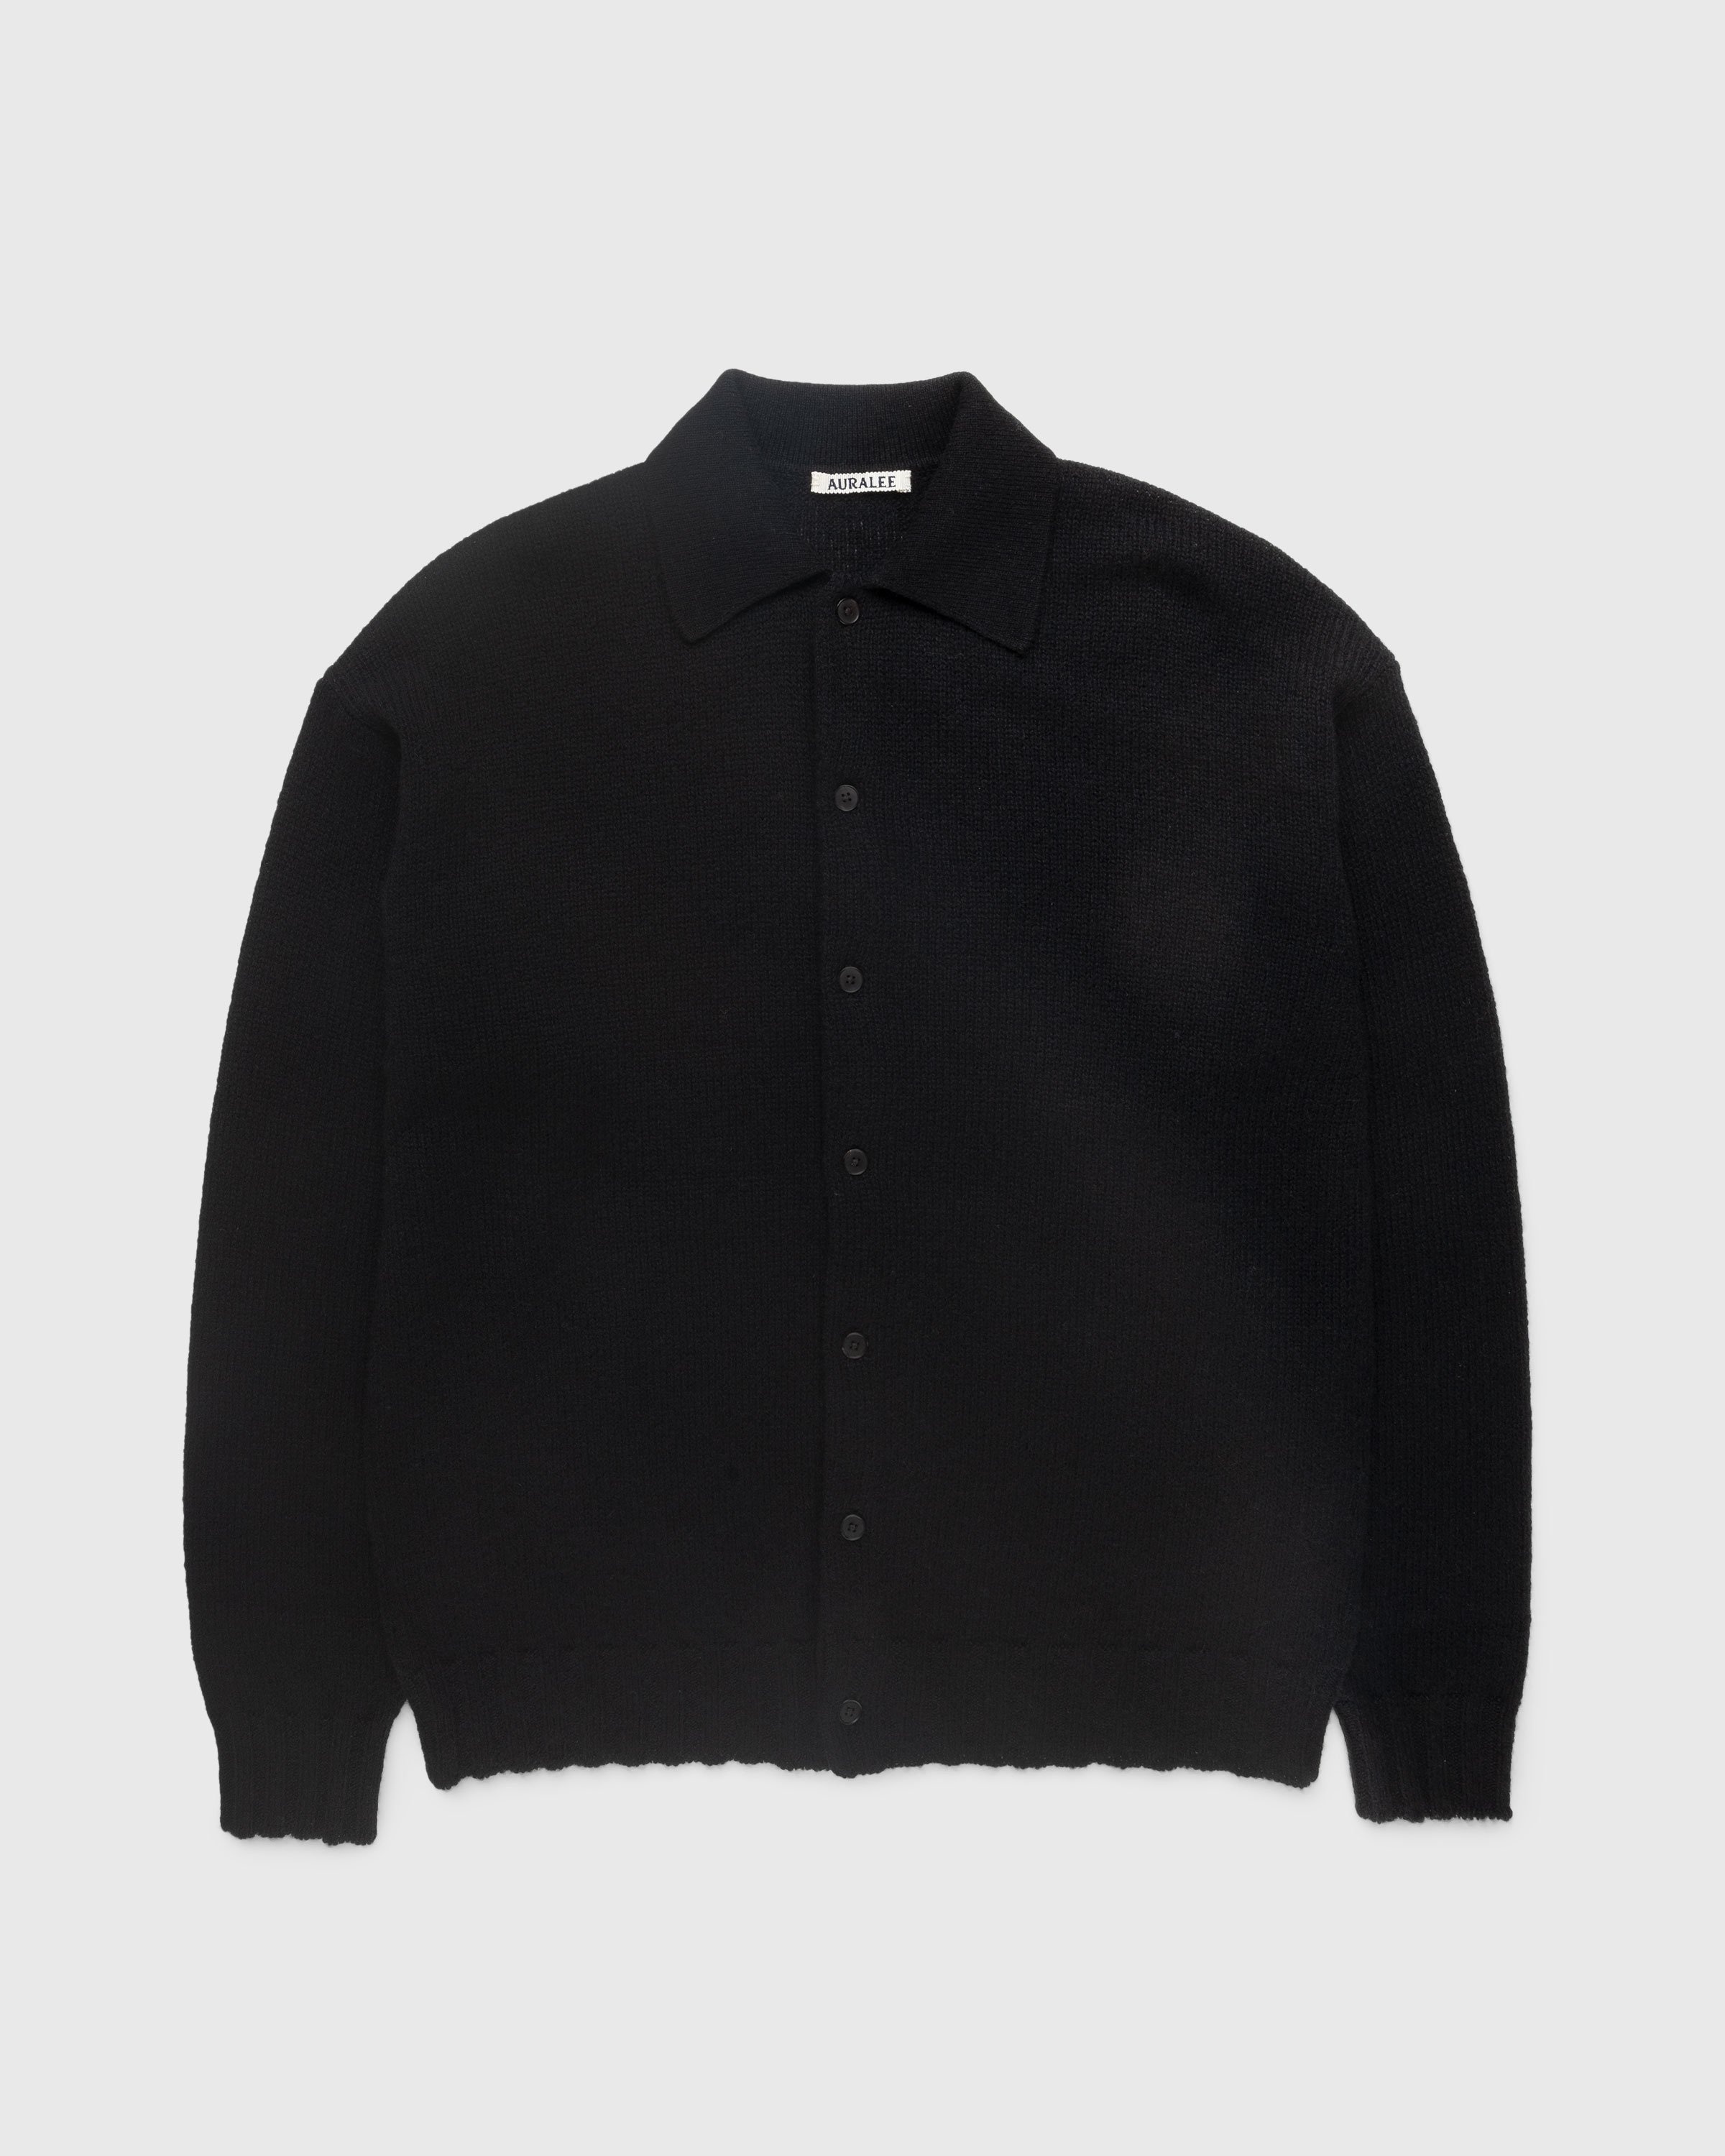 Auralee – Shetland Wool Cashmere Knit Cardigan Black - Knitwear - Black - Image 1